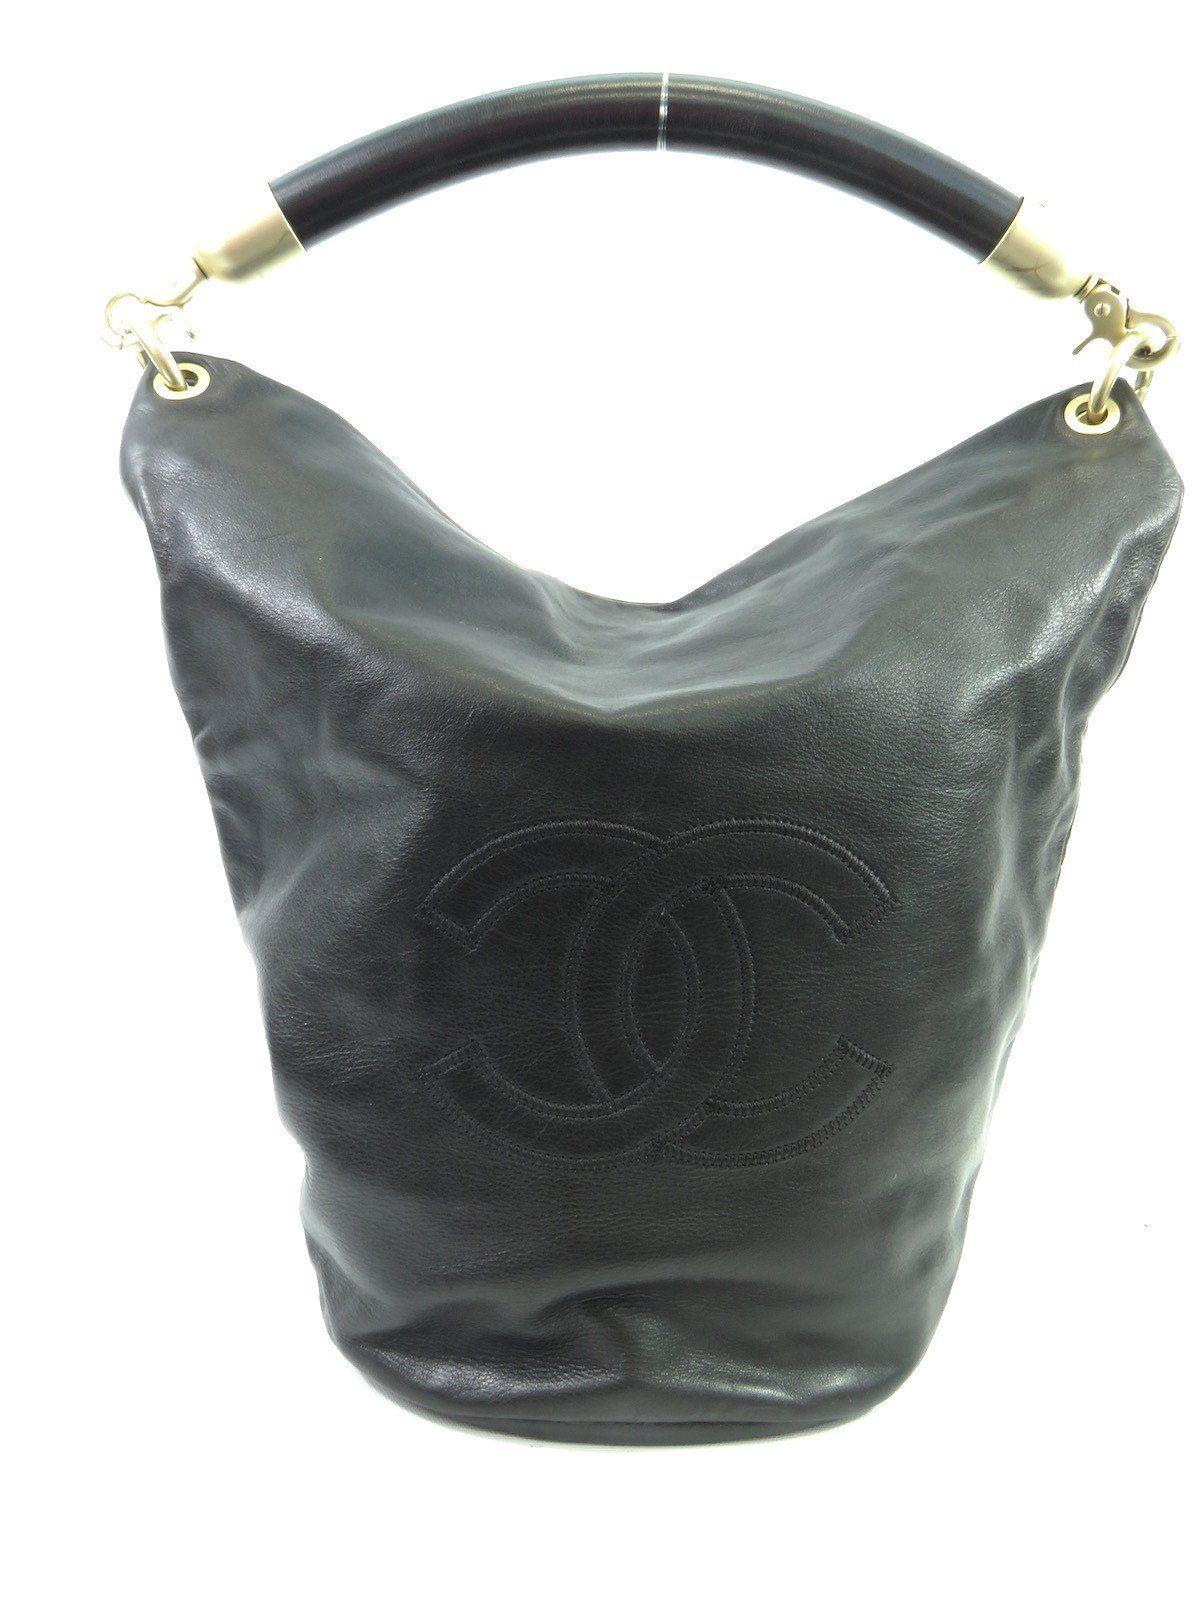 CC Purse Logo - CHANEL Women Black Leather CC Logo Gold Accent Bucket Hobo Bag Purse T